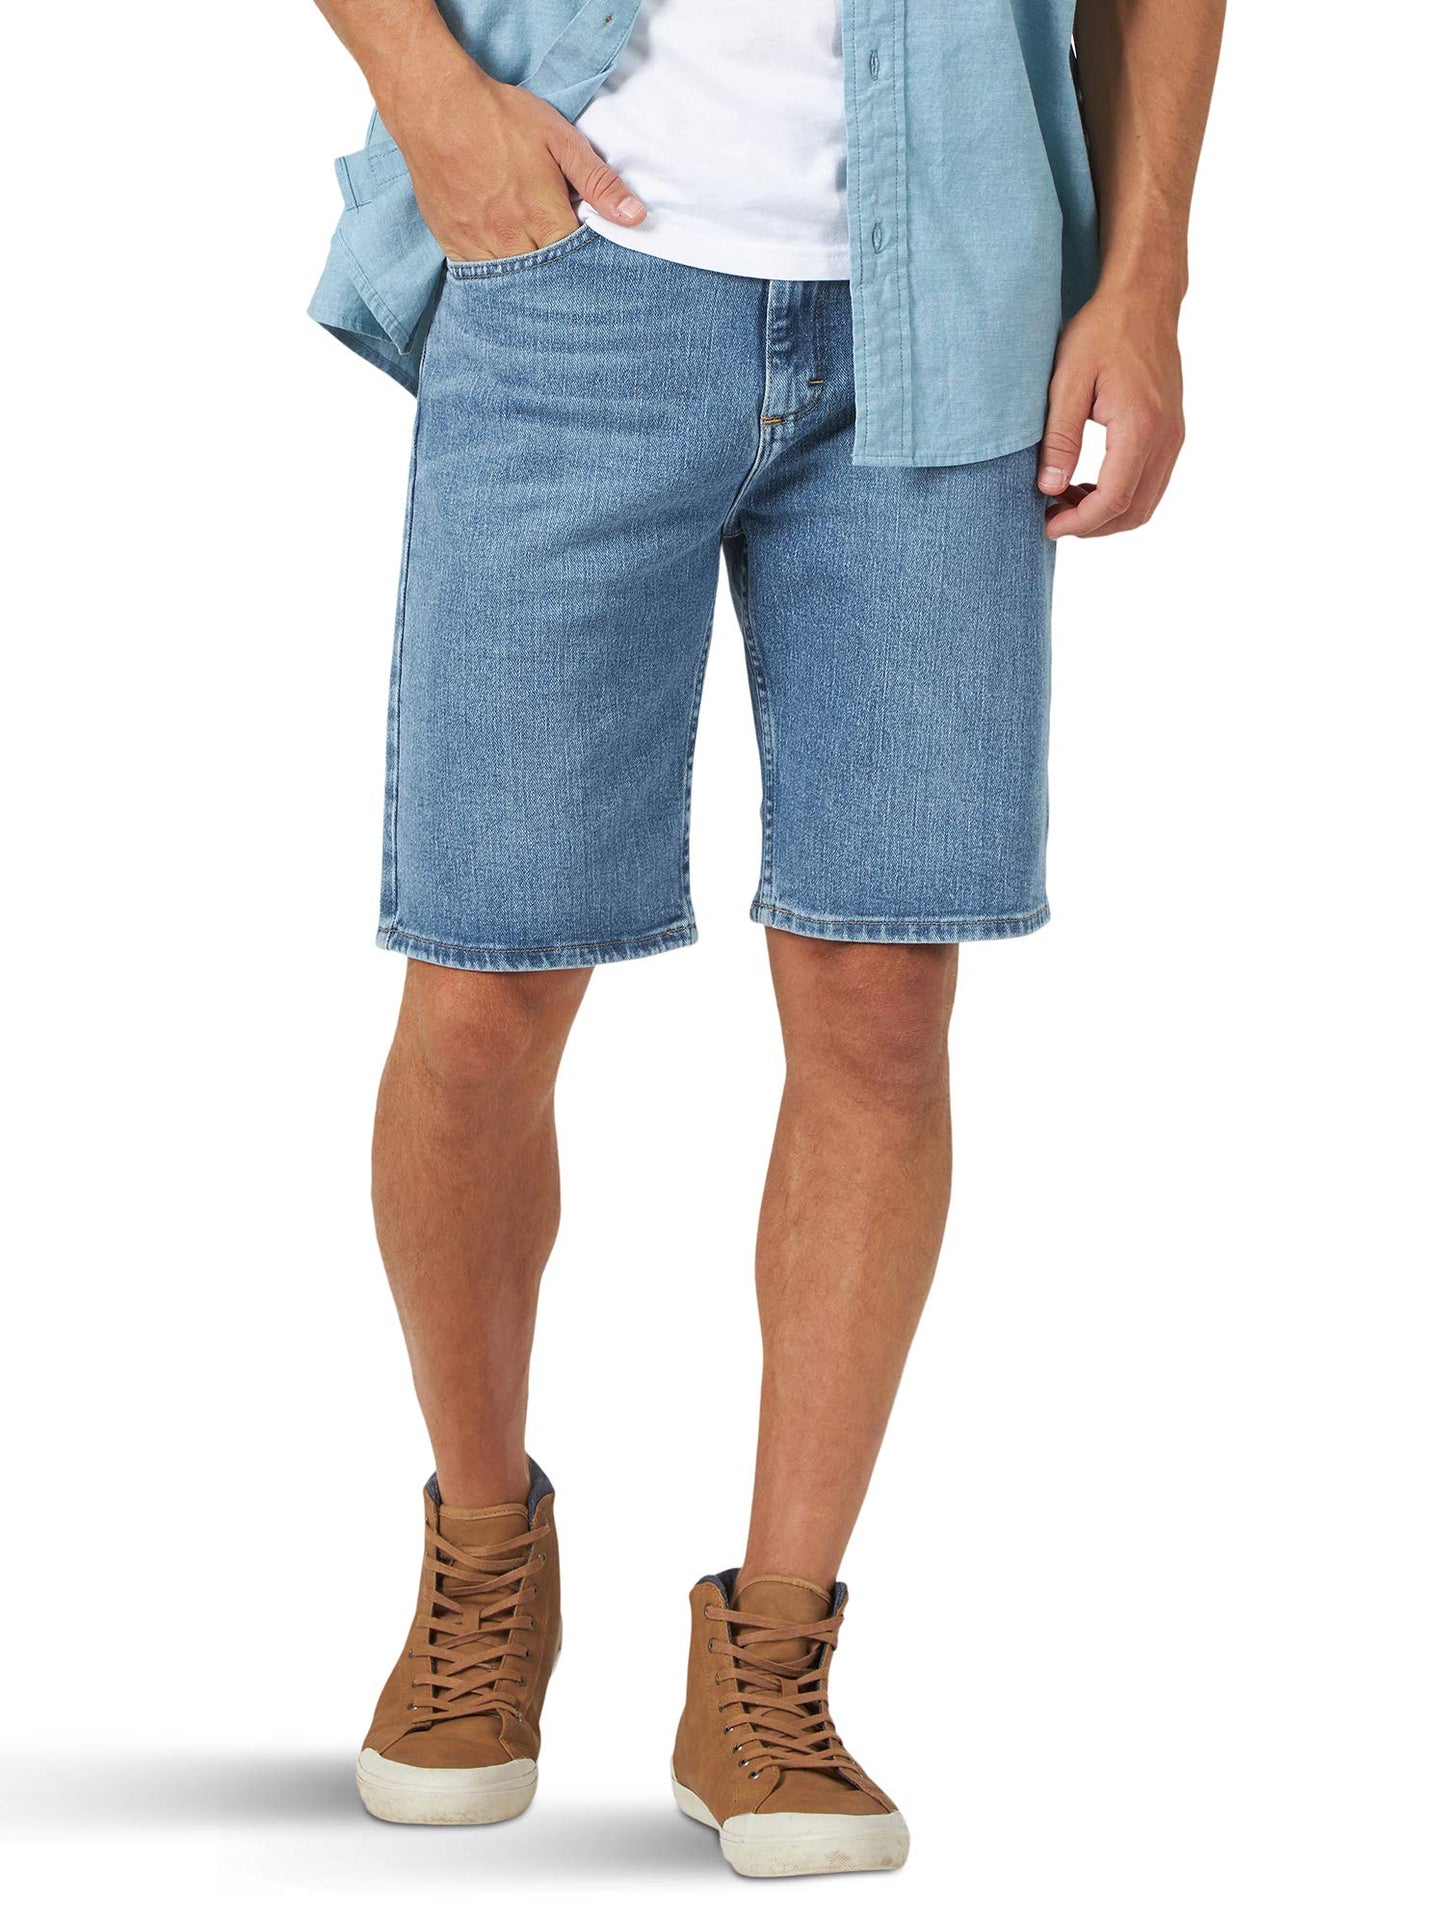 Wrangler Authentics Men's Classic Relaxed Fit Five Pocket Jean Short, Light Wash Flex, 33